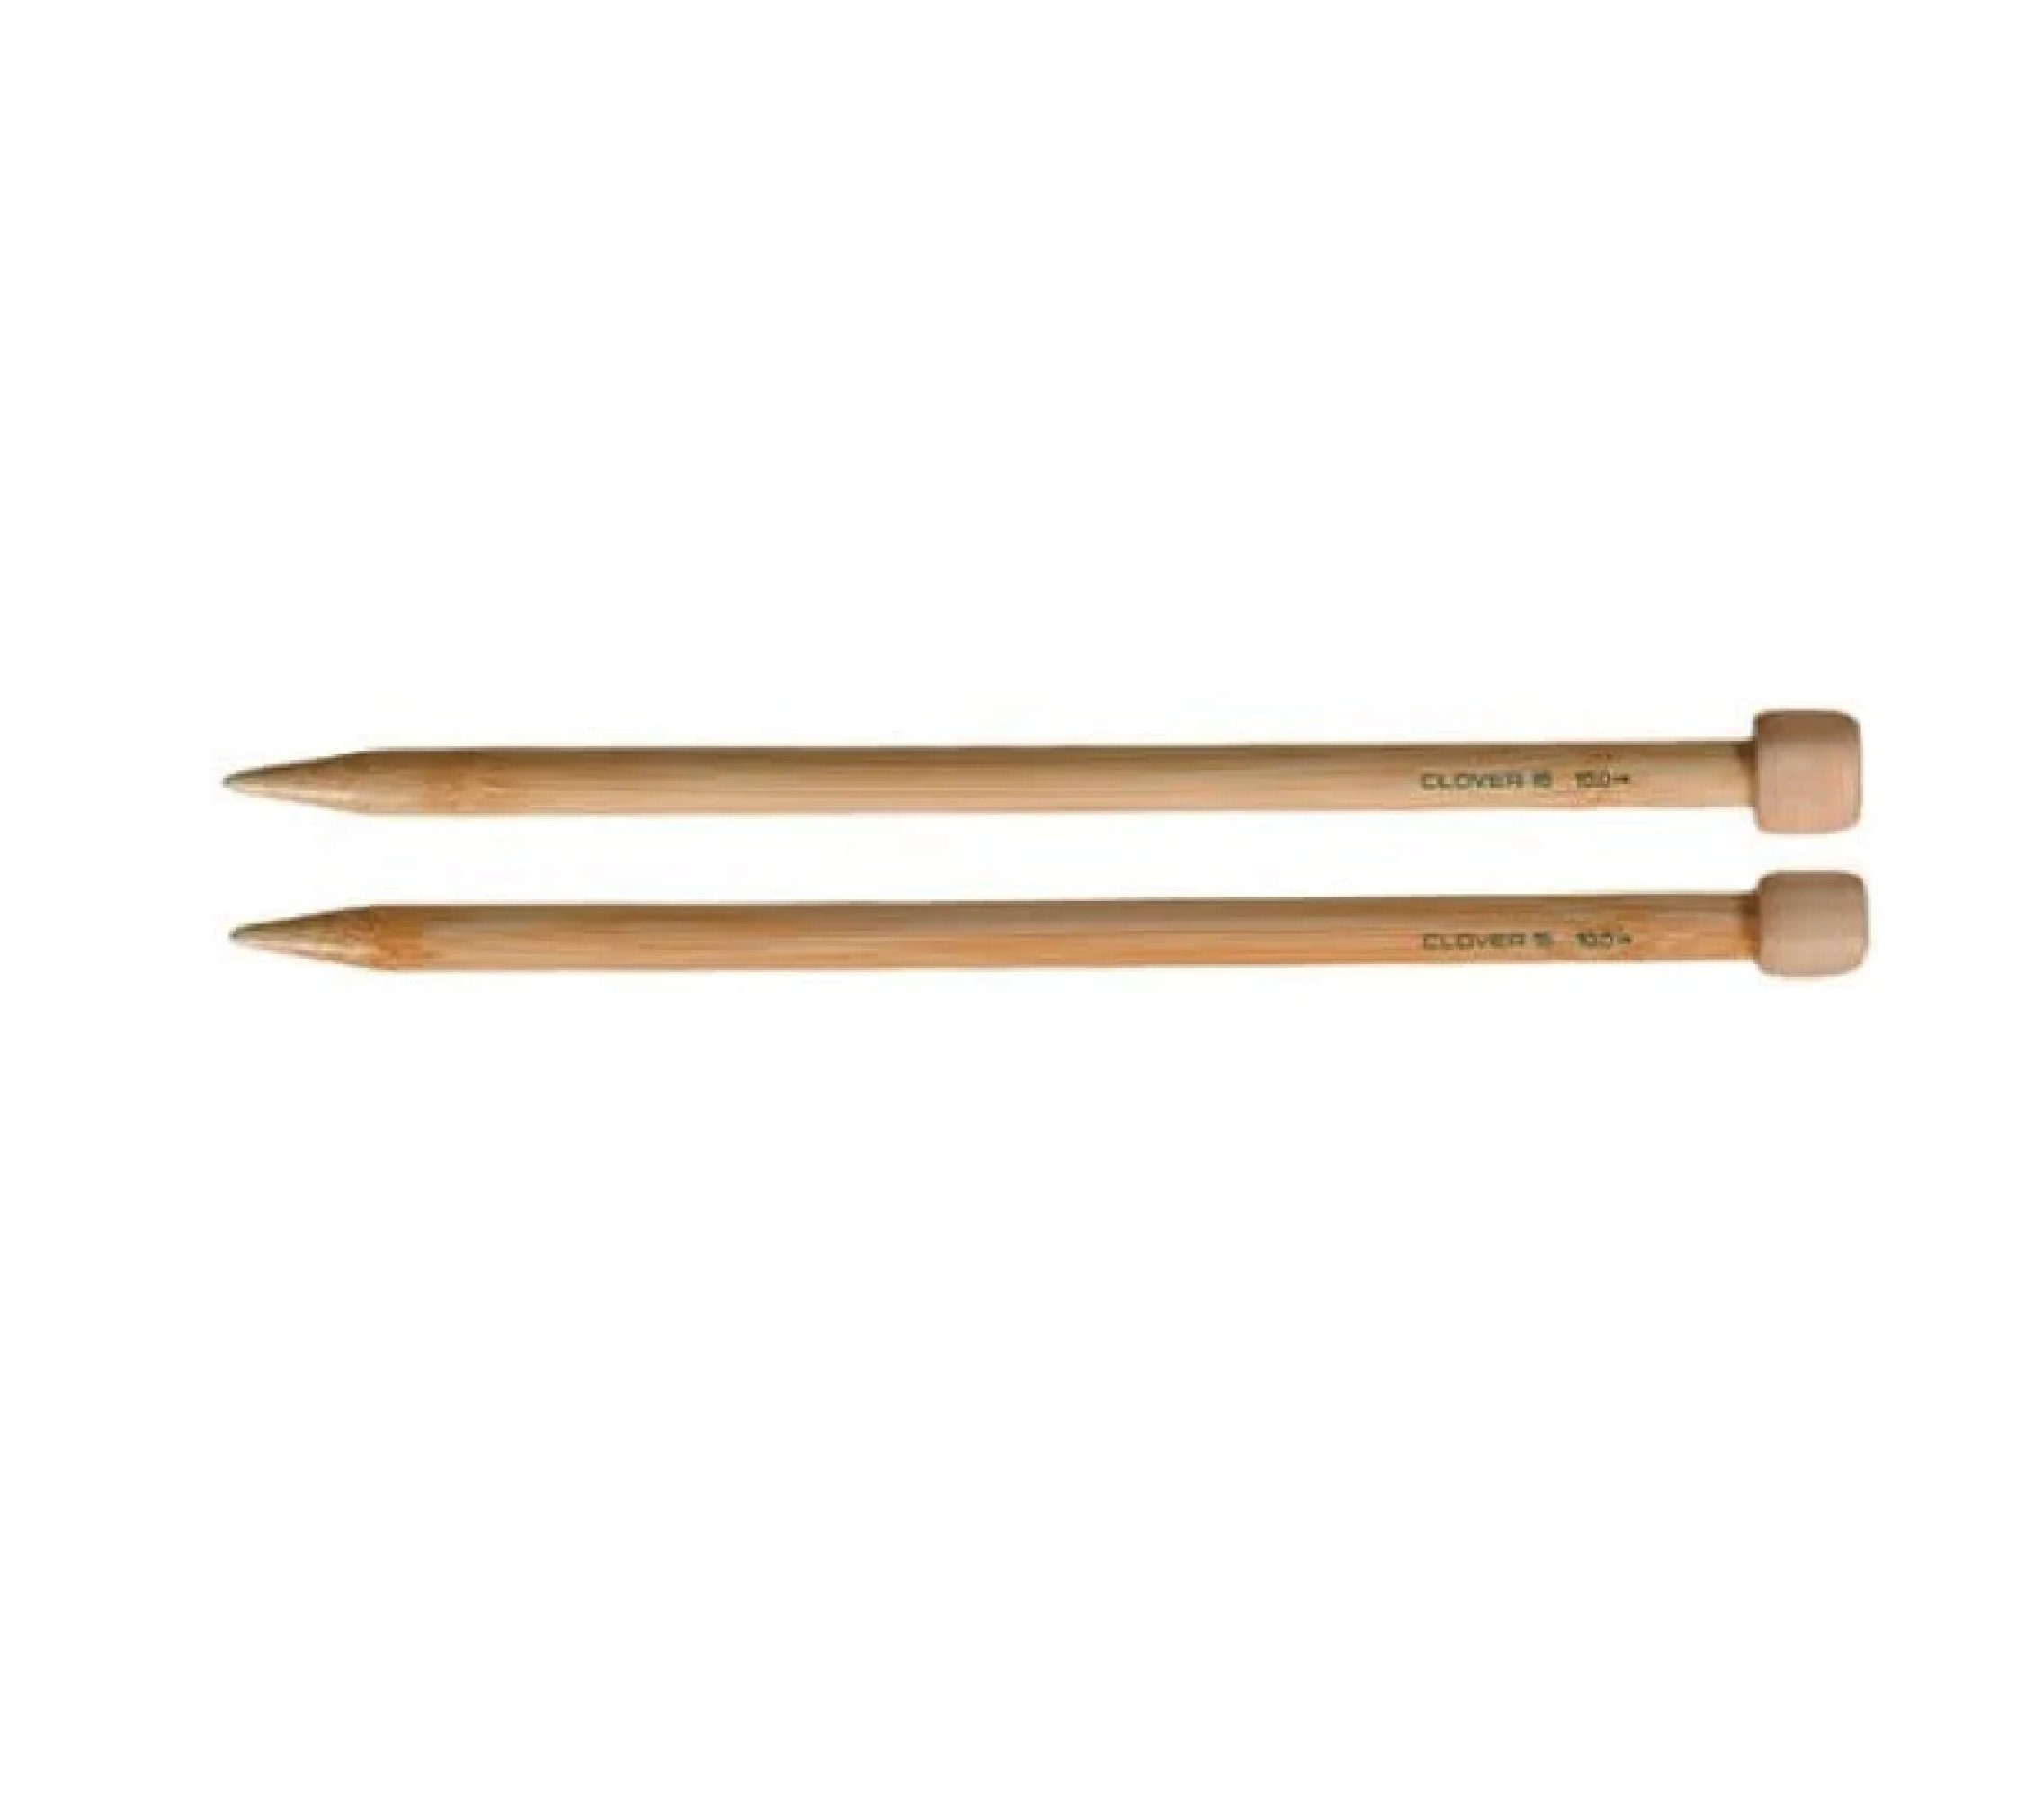 Clover / Bamboo Circular Knitting Needles Takumi 80cm/3.75mm, 3928 